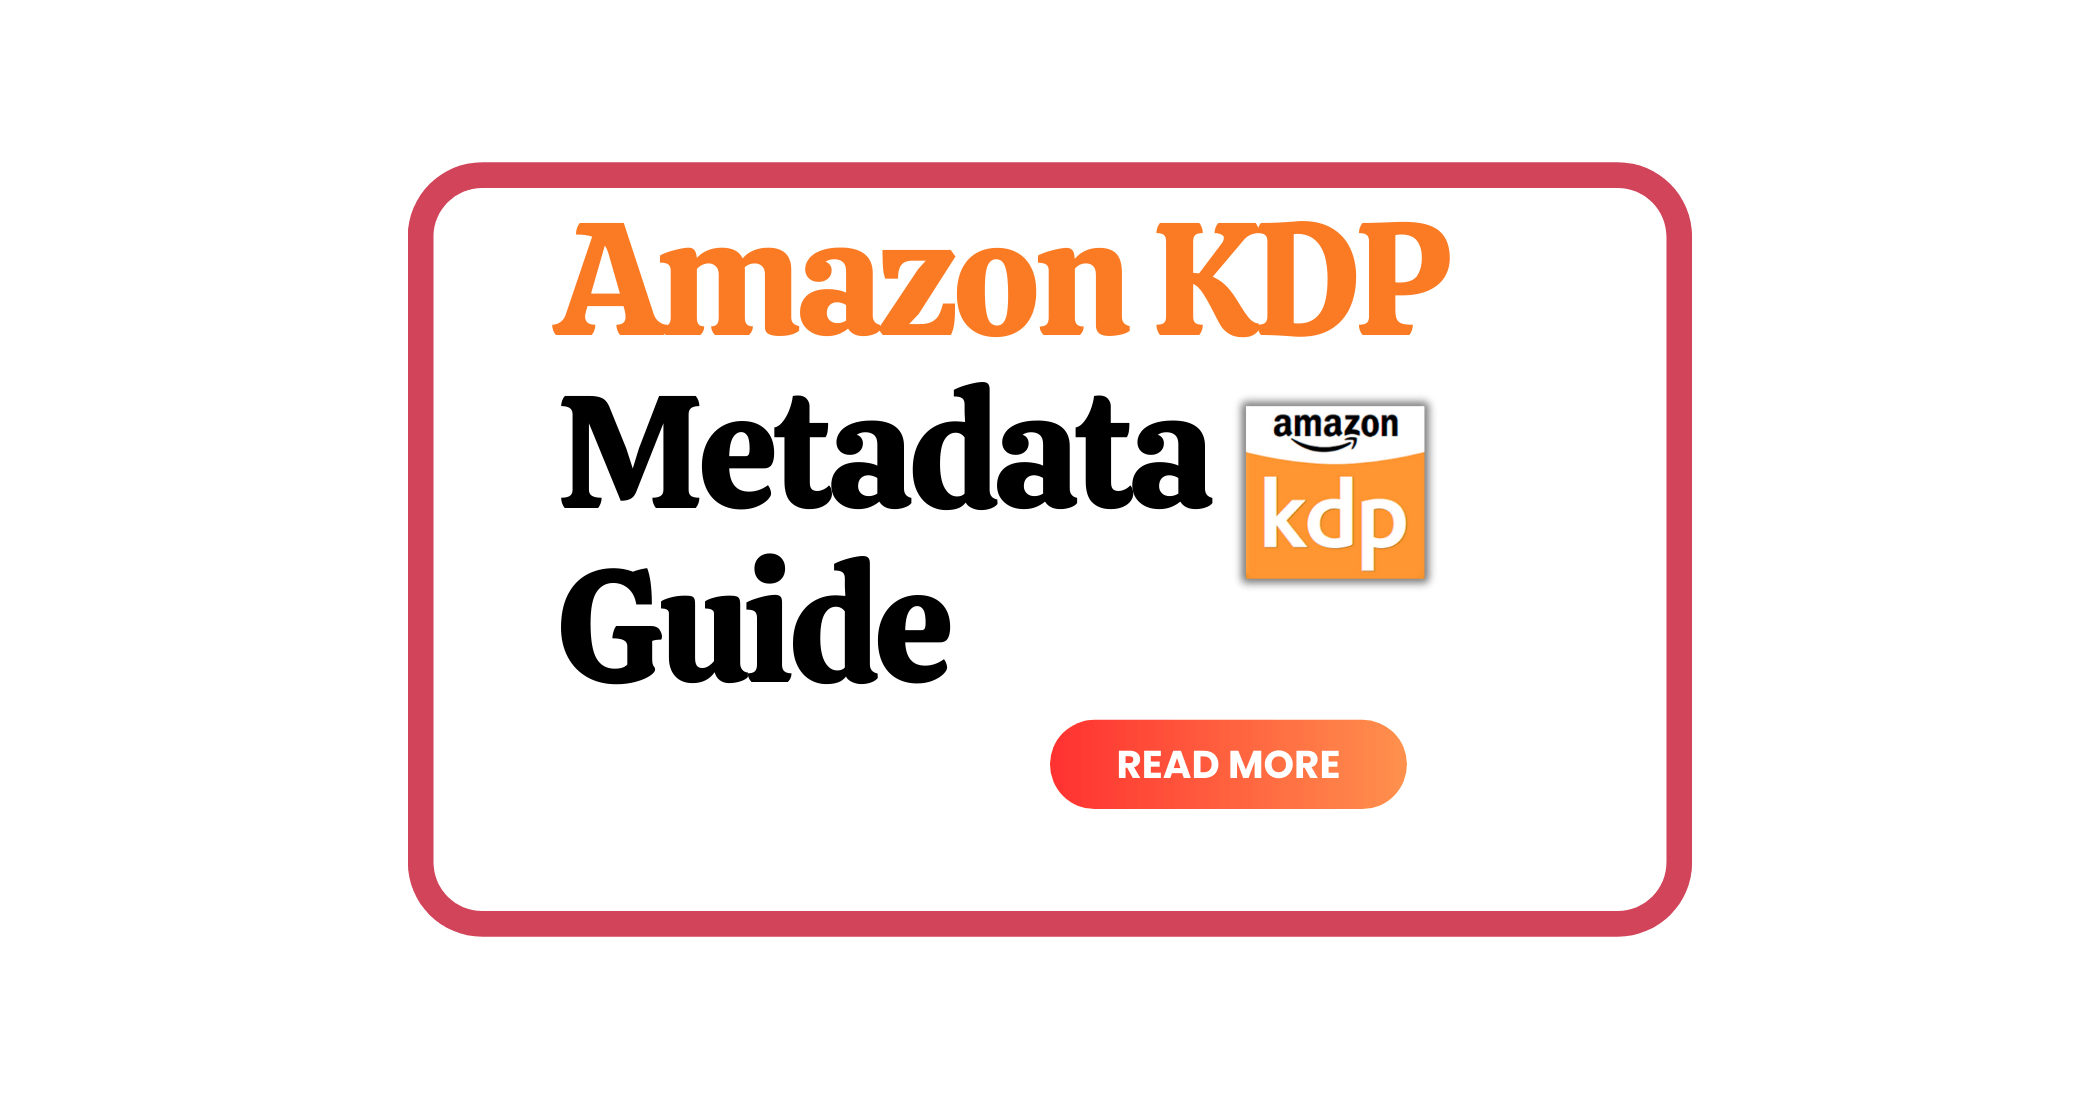 Amazon KDP Metadata Guide